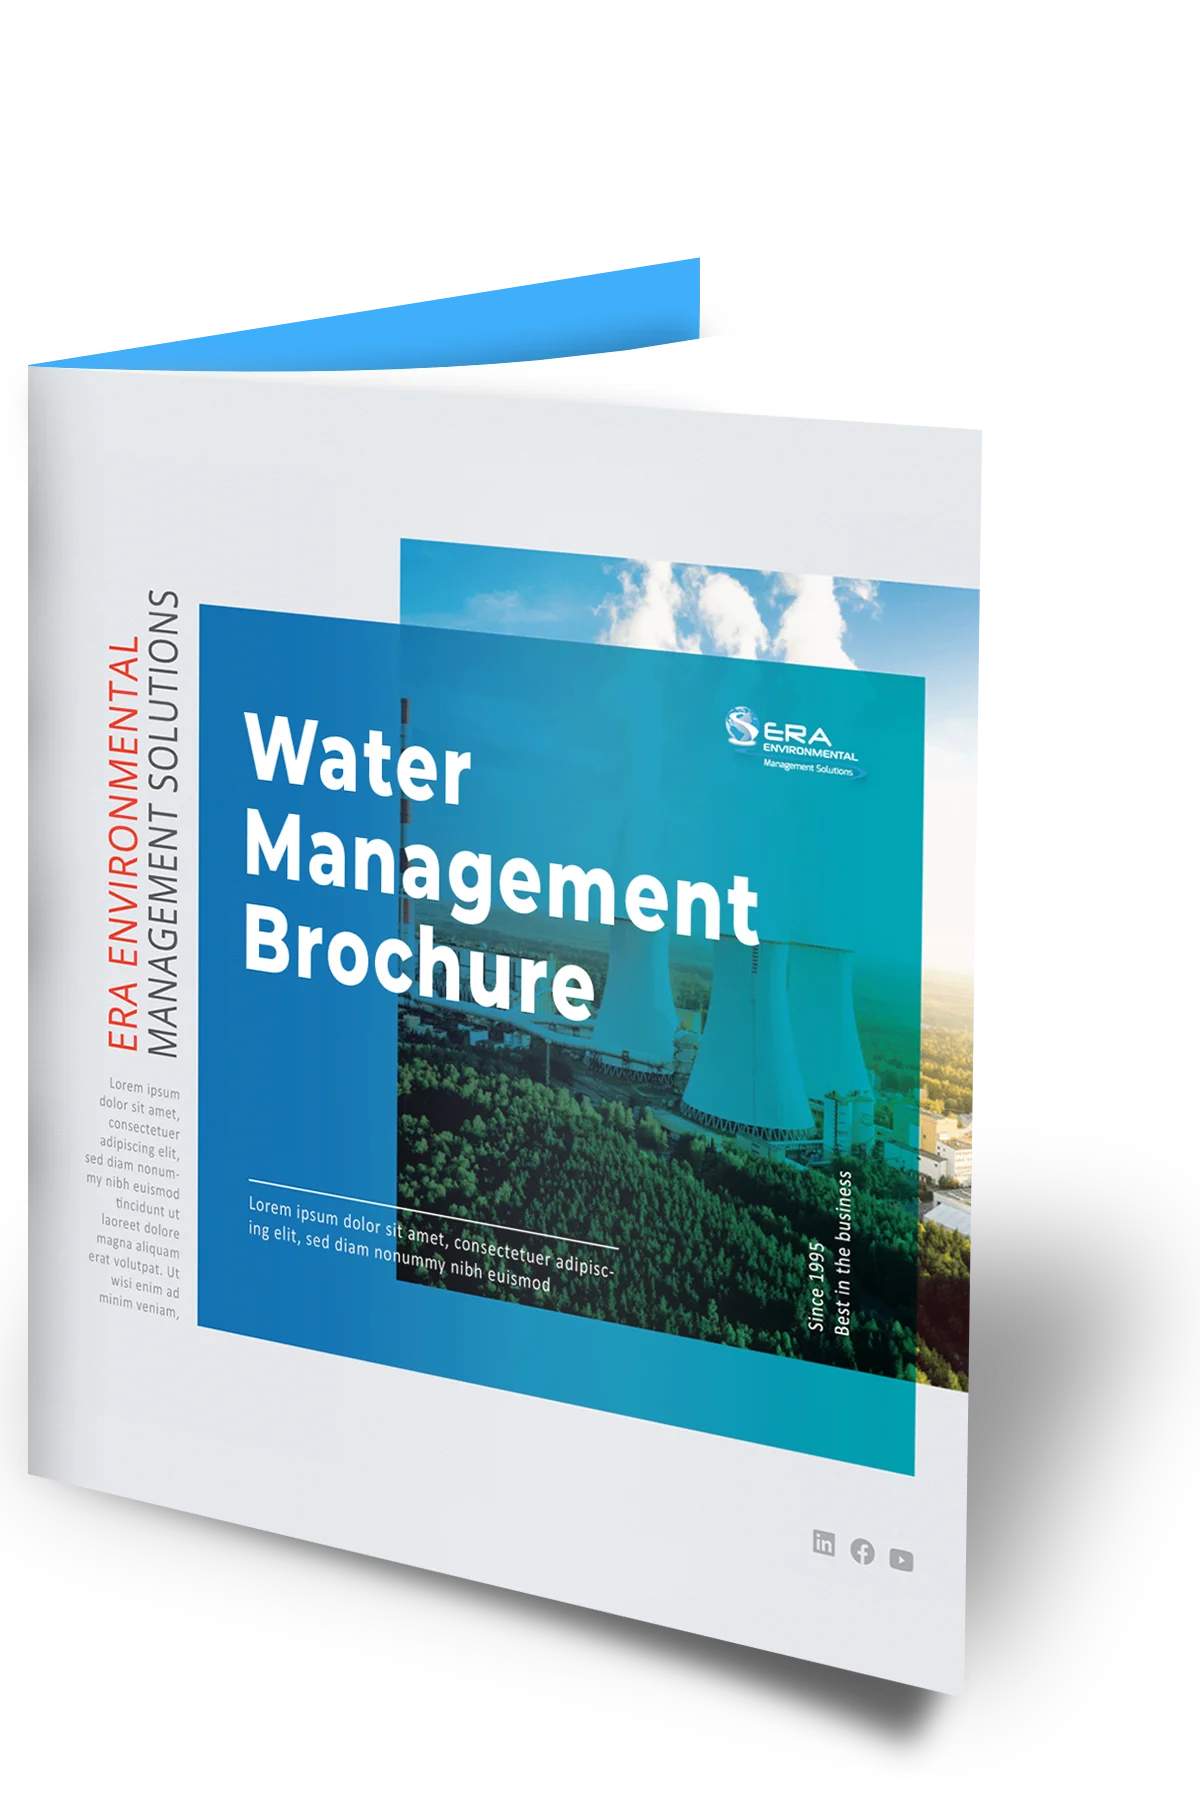 water-management-brochure-mock-up